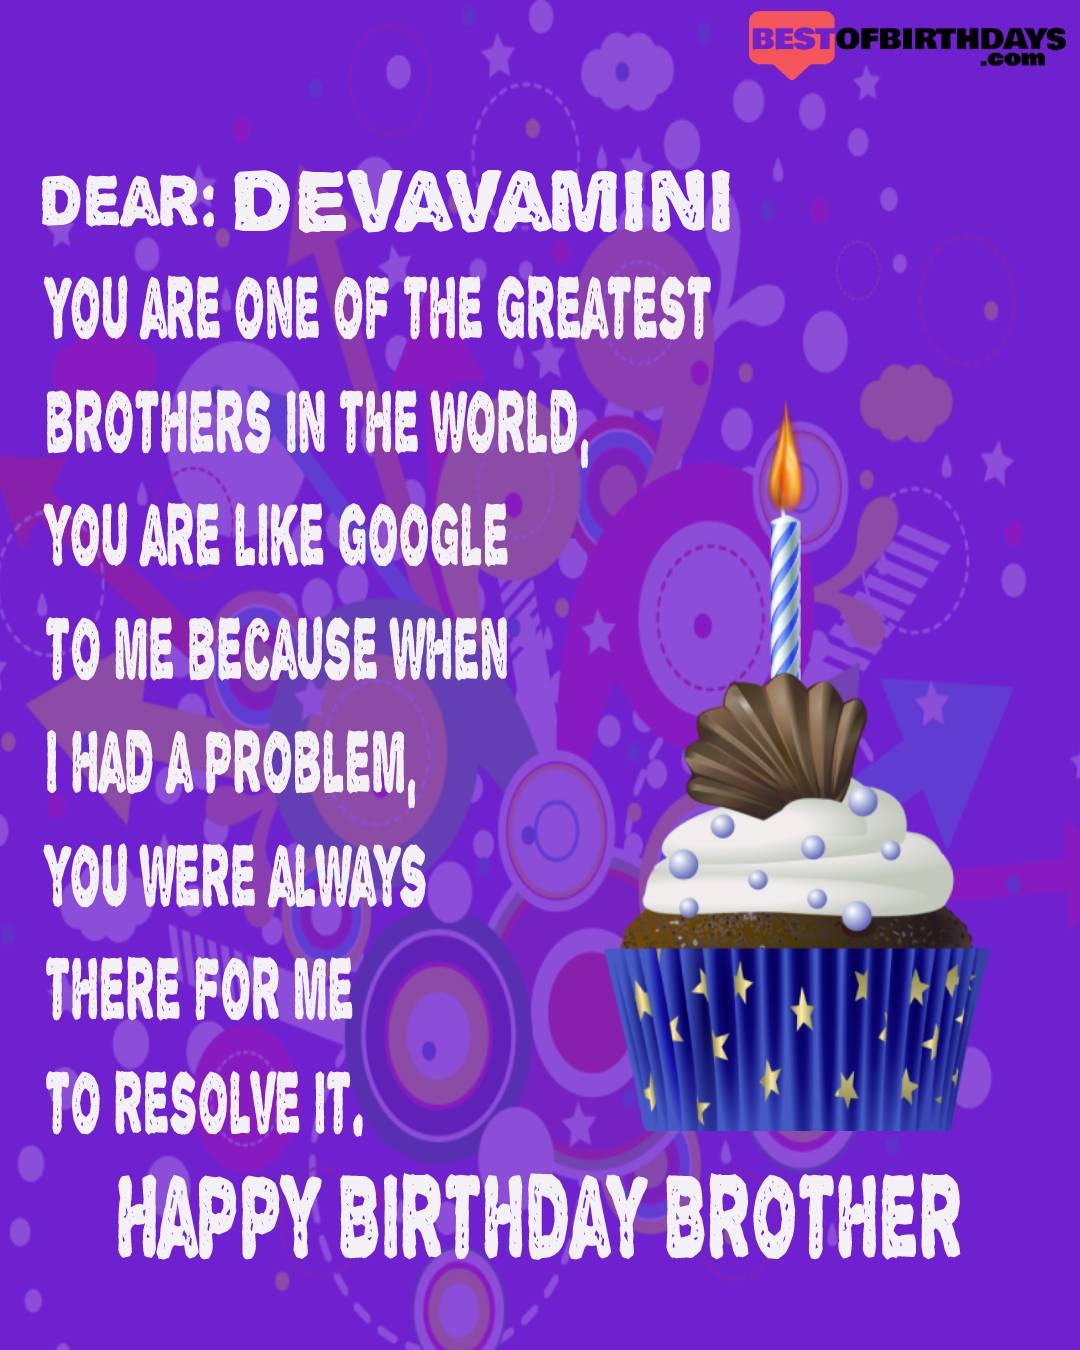 Happy birthday devavamini bhai brother bro